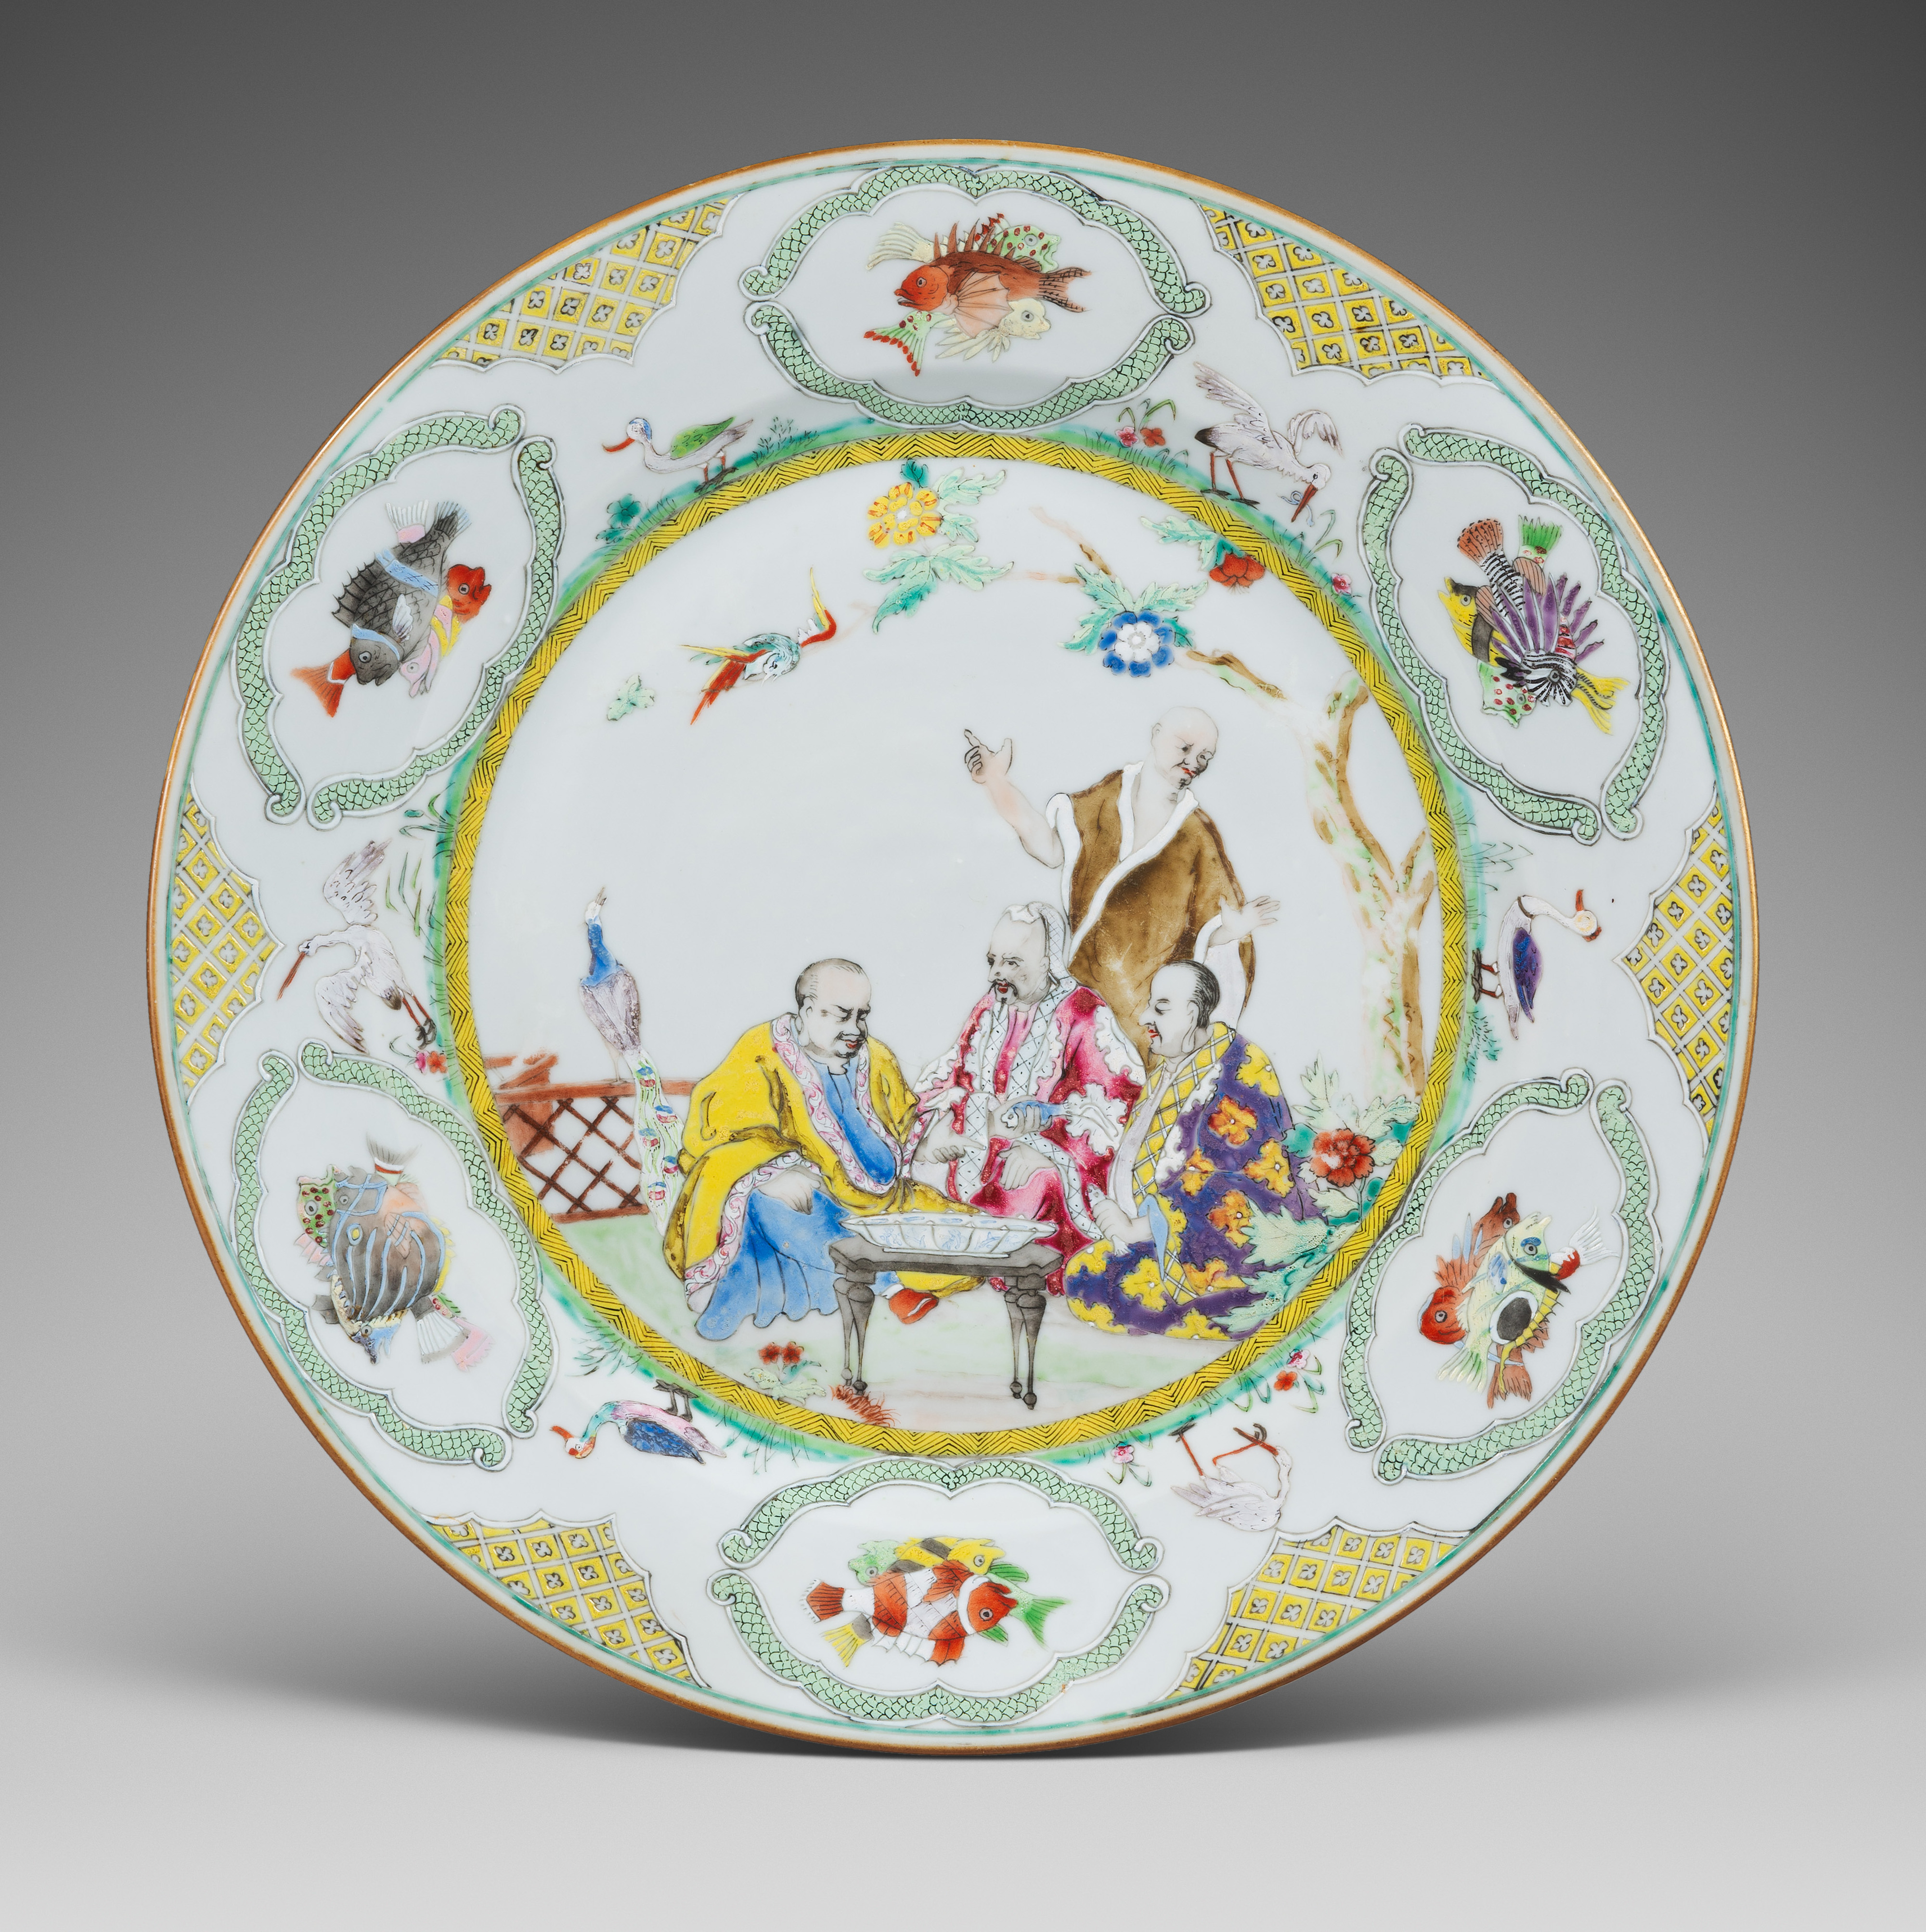 Porcelaine Qianlong (1736-1795), circa 1738, Chine